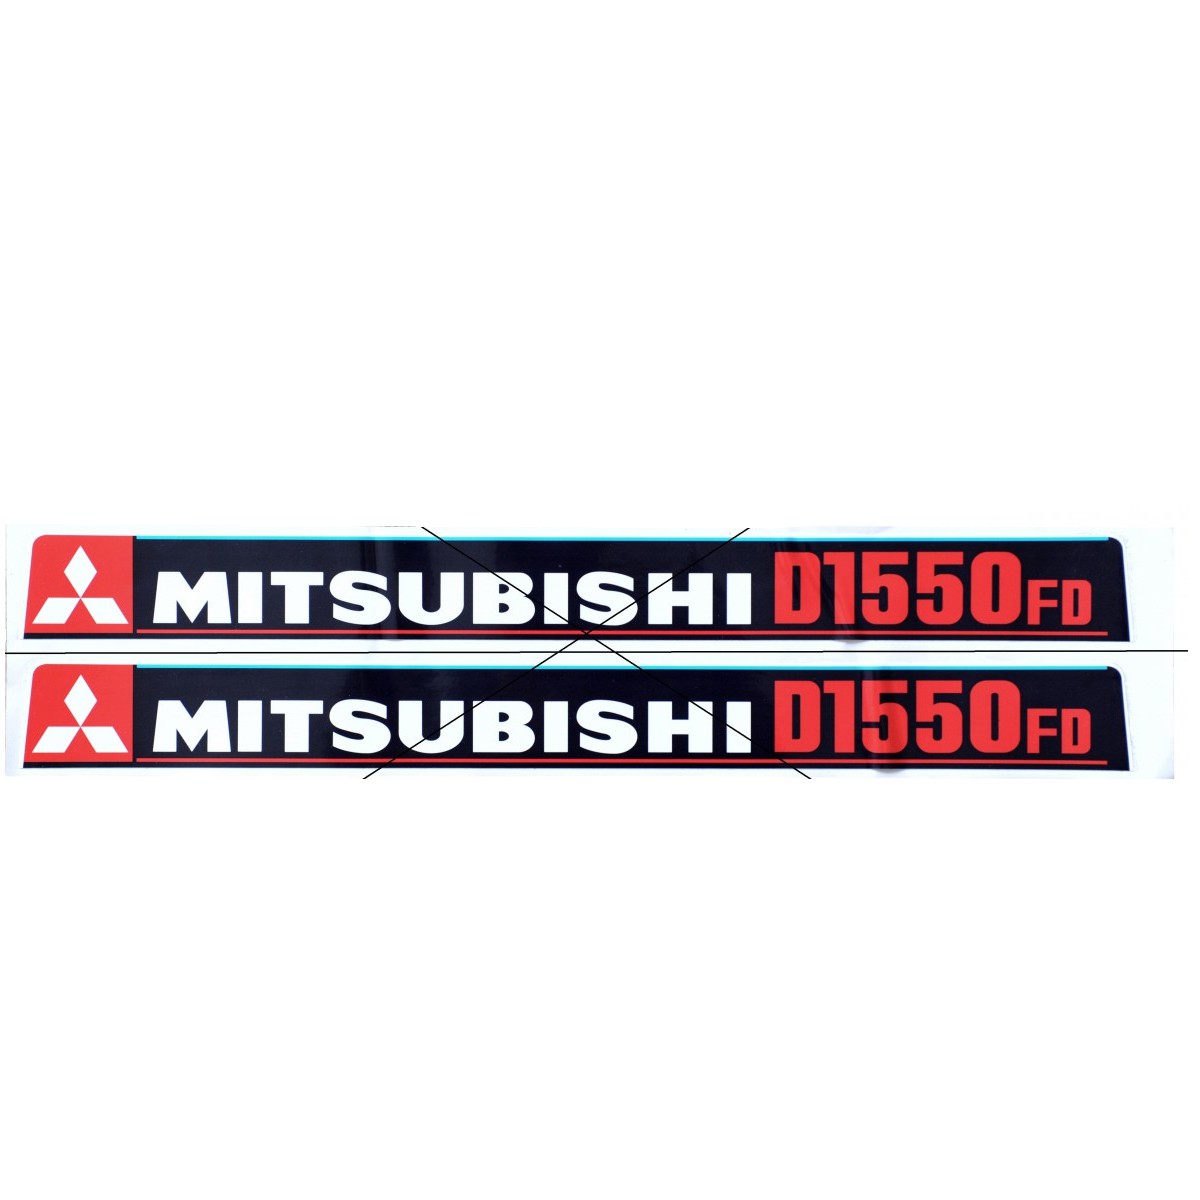 Mitsubishi D1550FD decals sticker